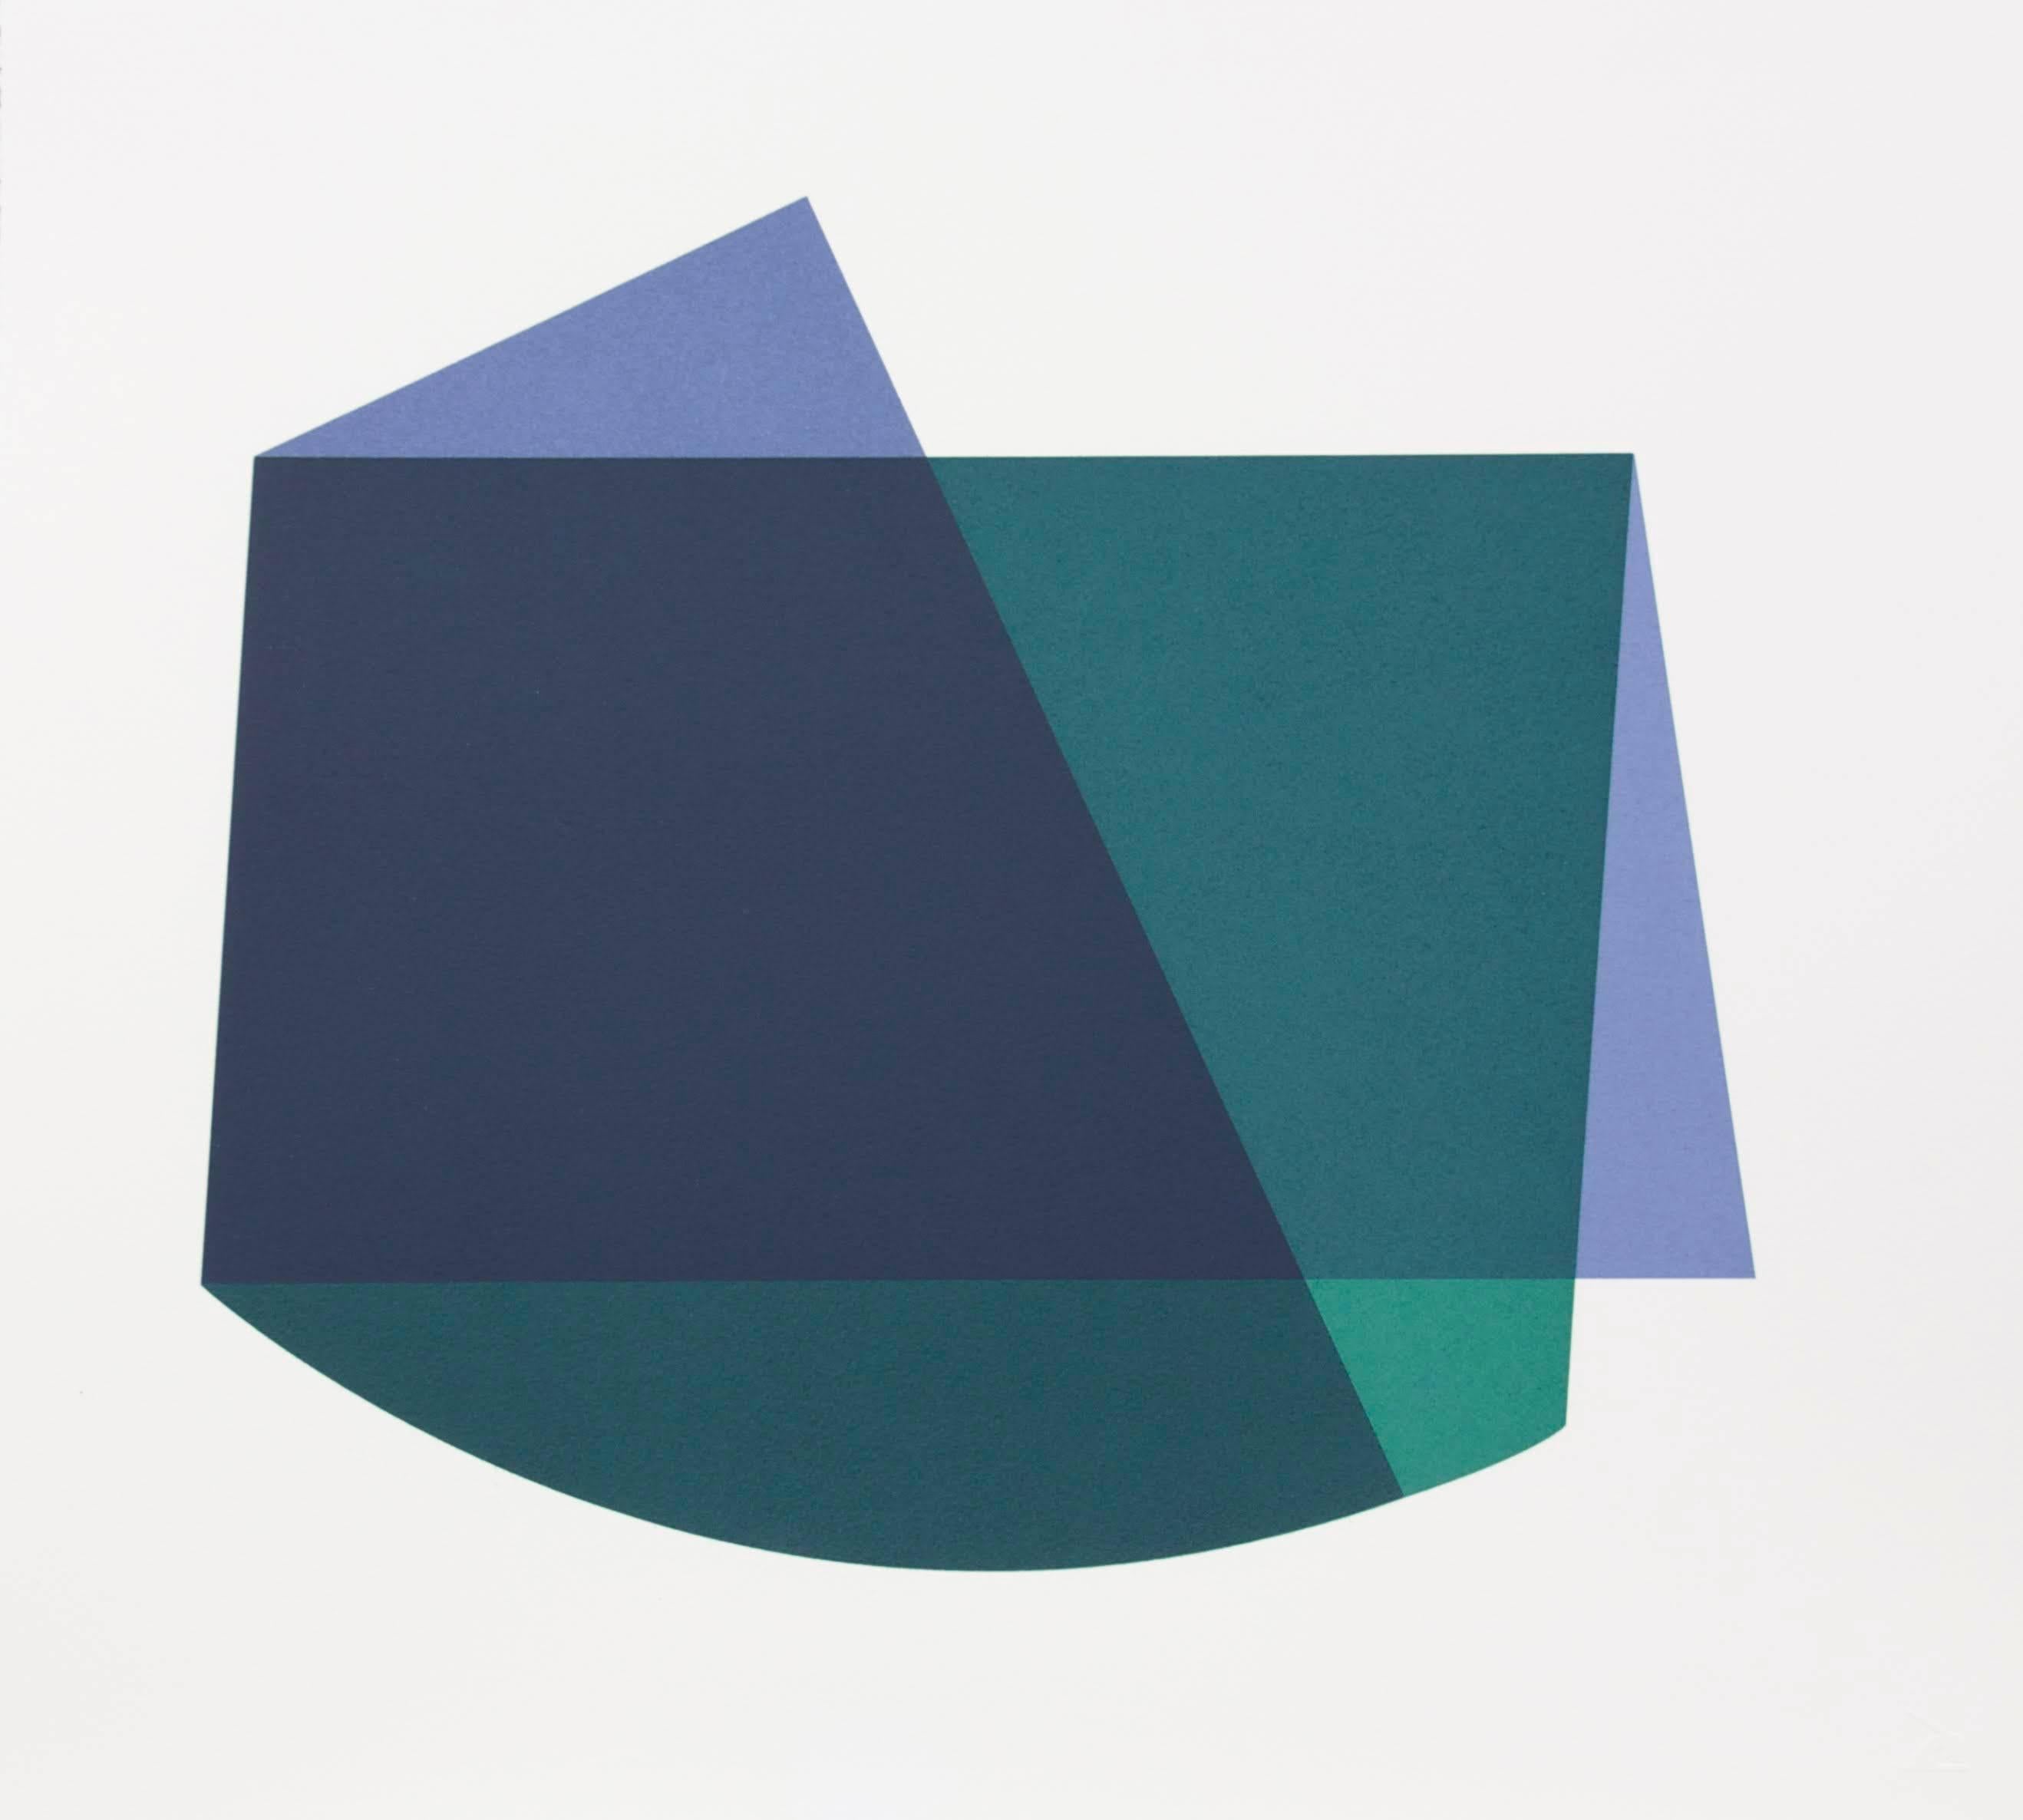 Willard Boepple Abstract Print - 20.11.13 T